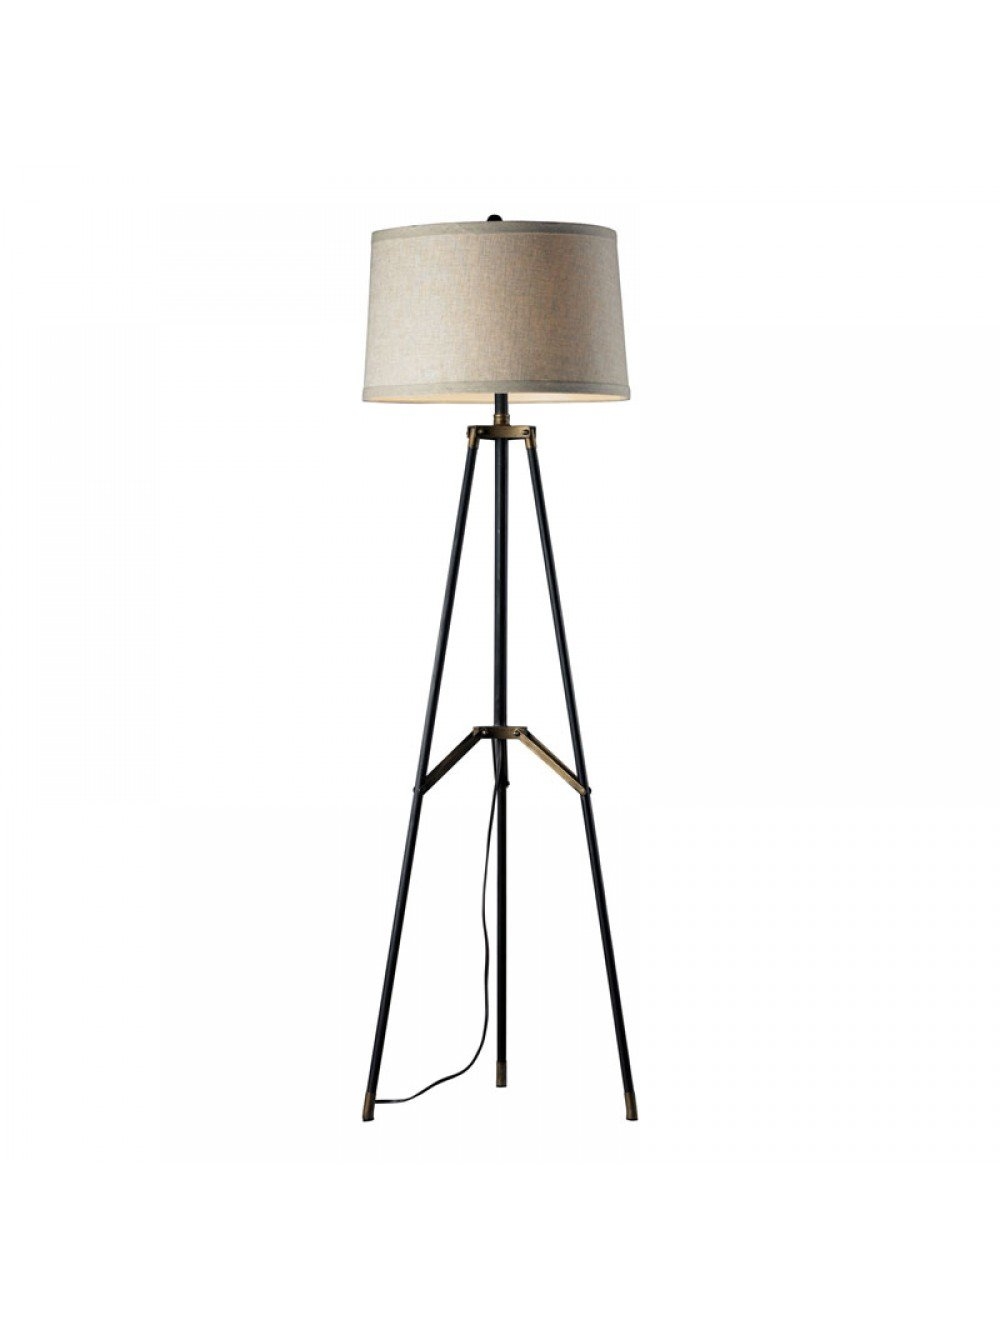 Norah Floor Lamp - Image 0